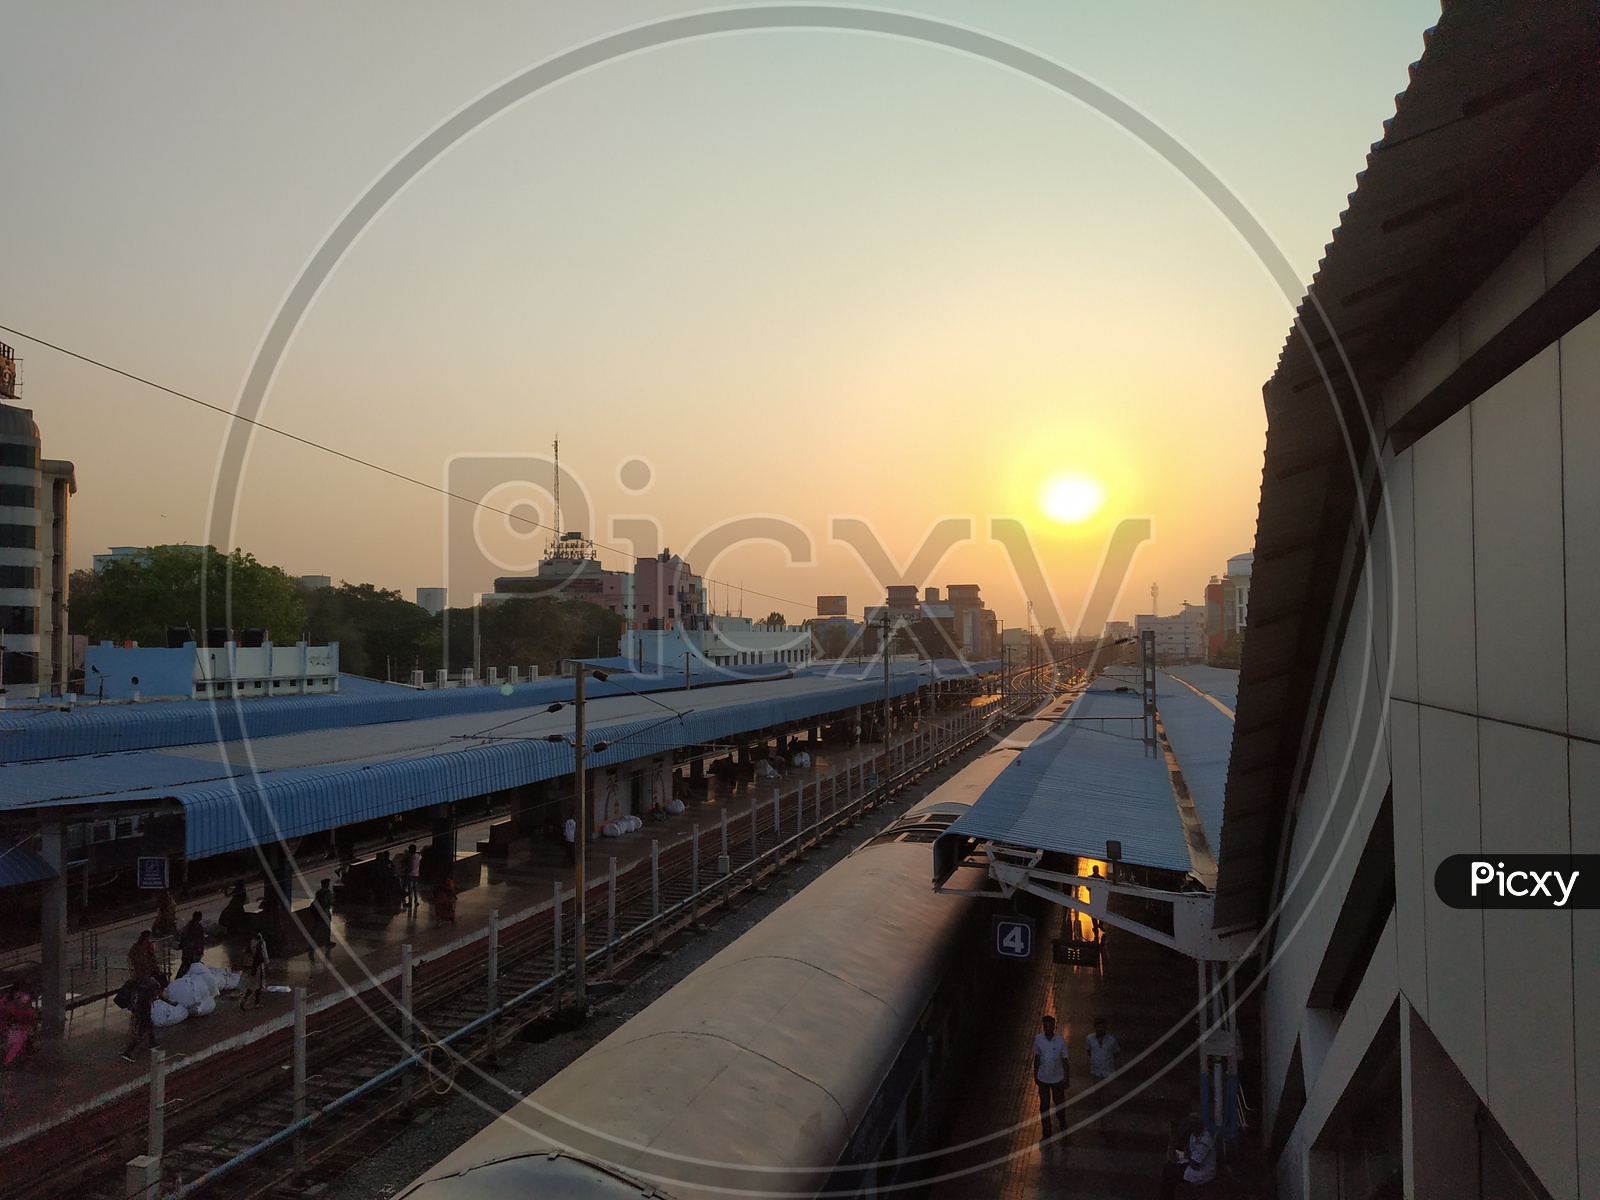 Railway Station during the sunrise